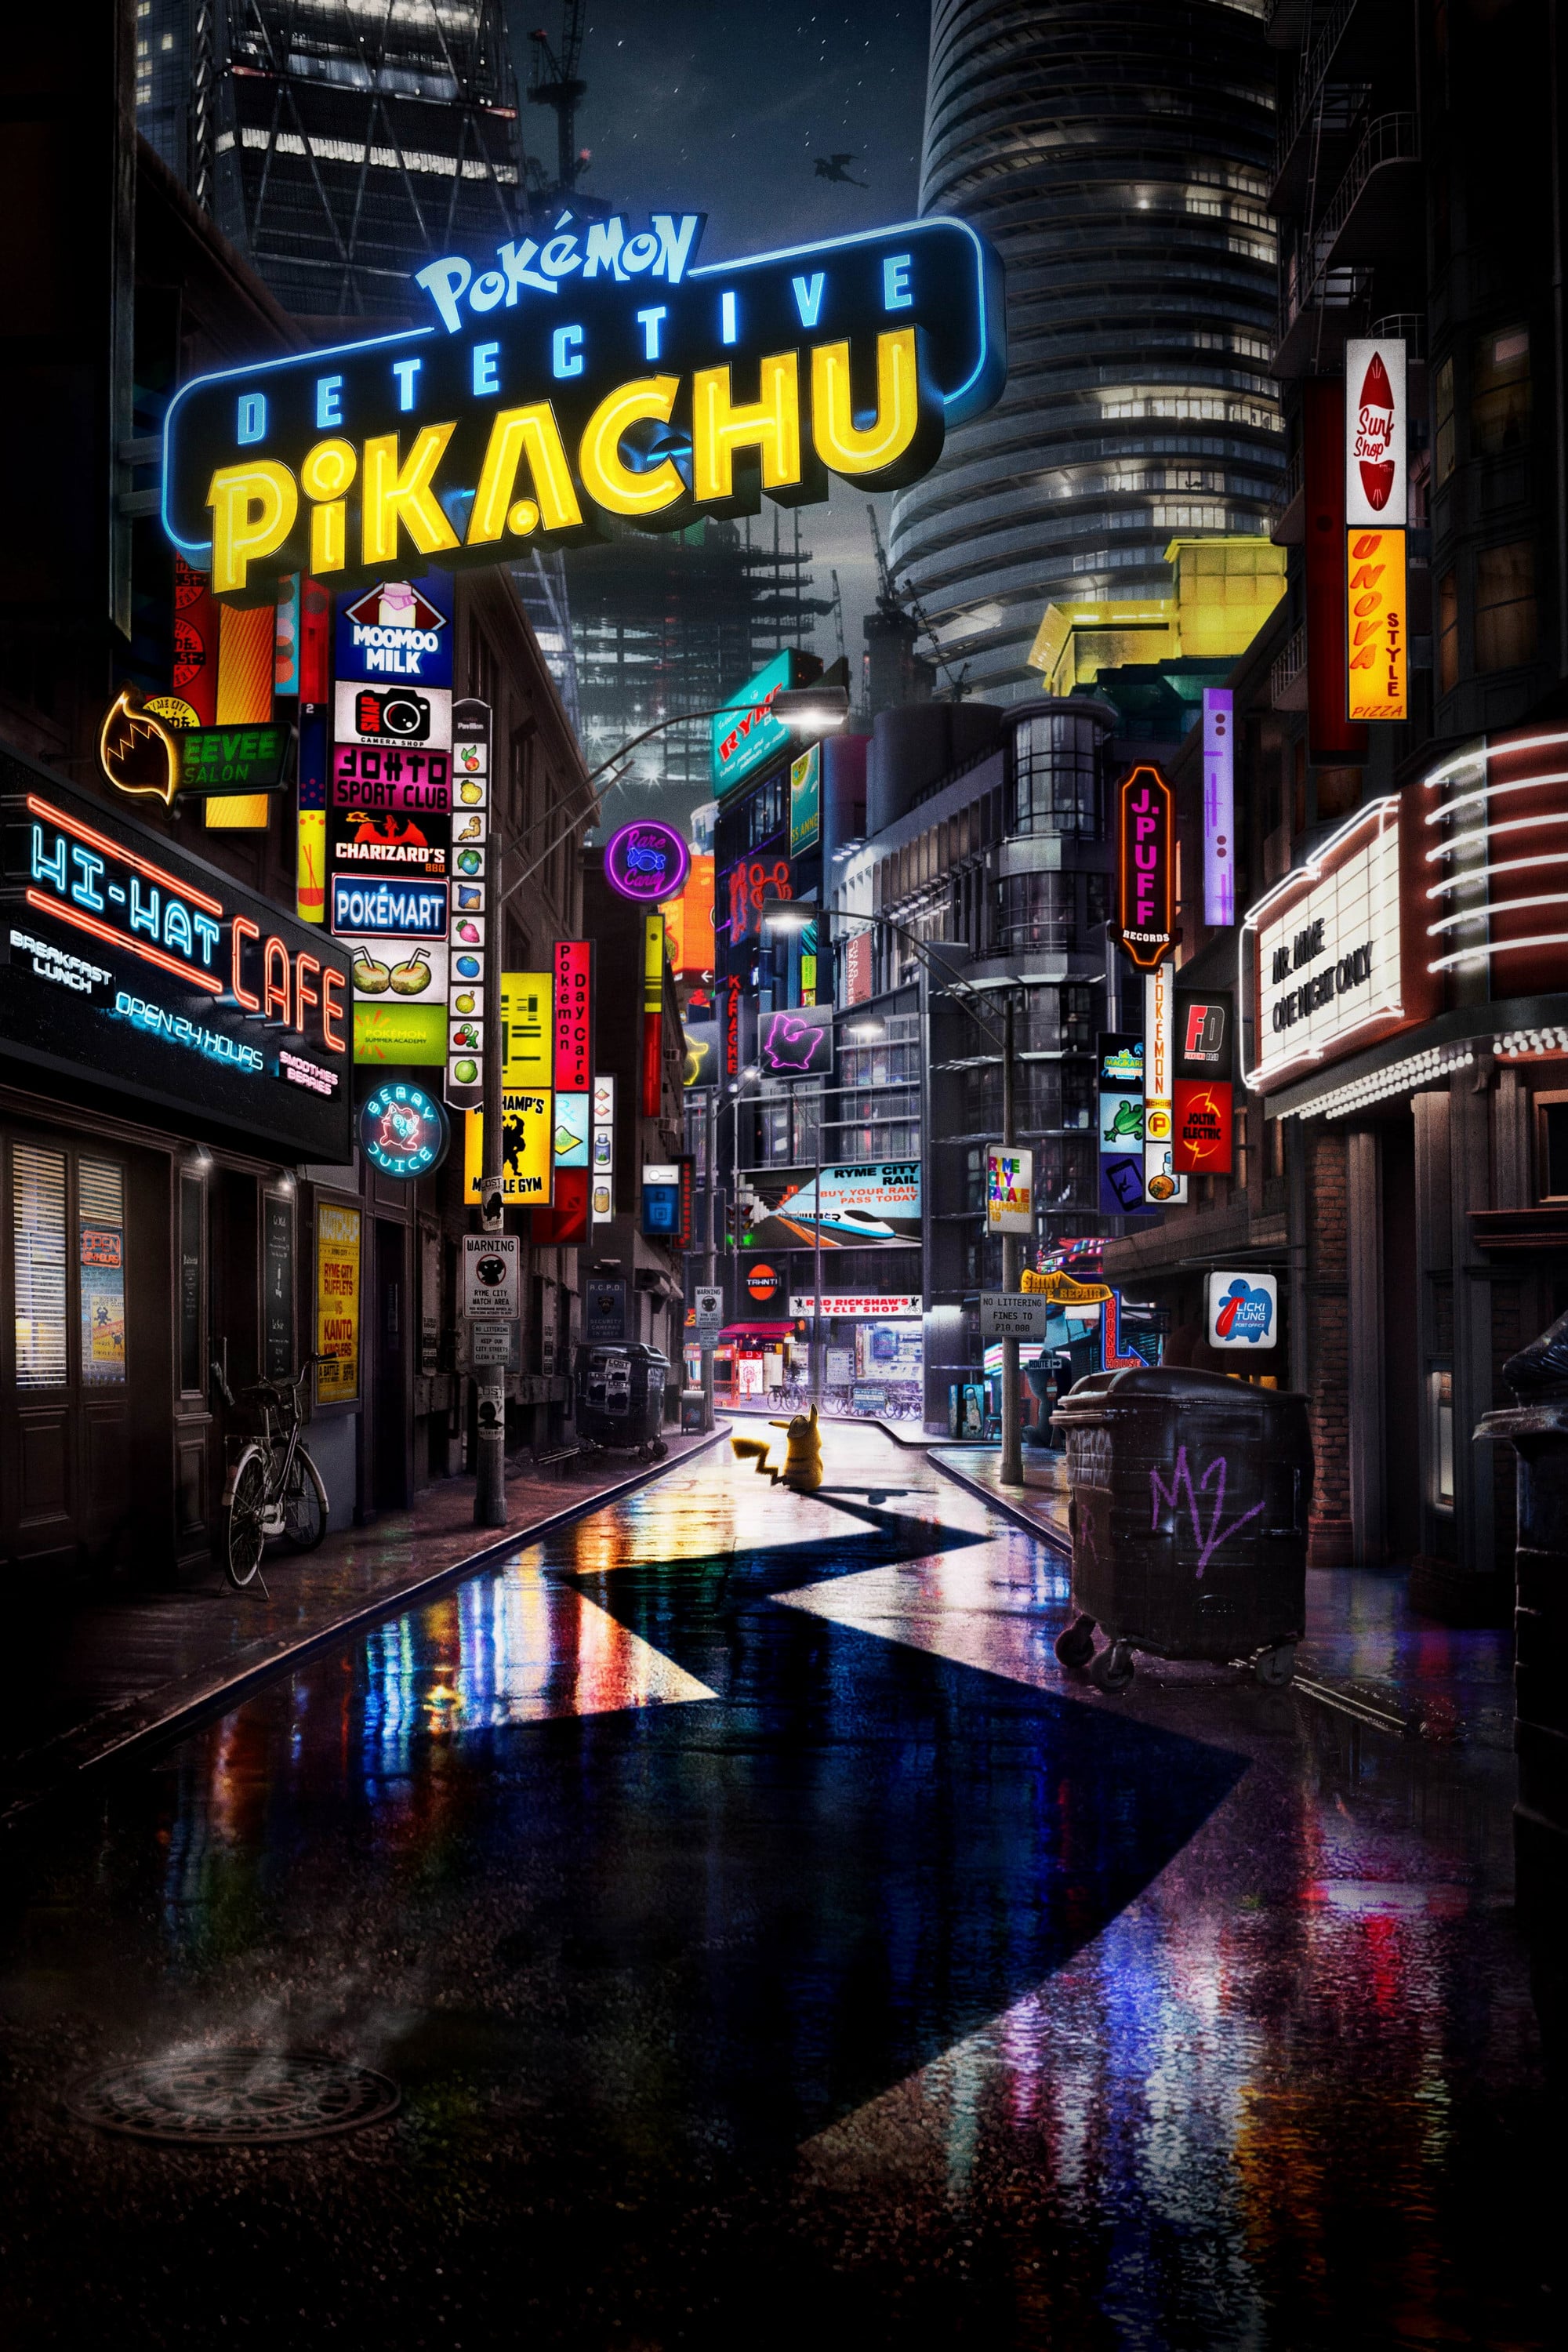 Poster for the movie "Pokémon Detective Pikachu"